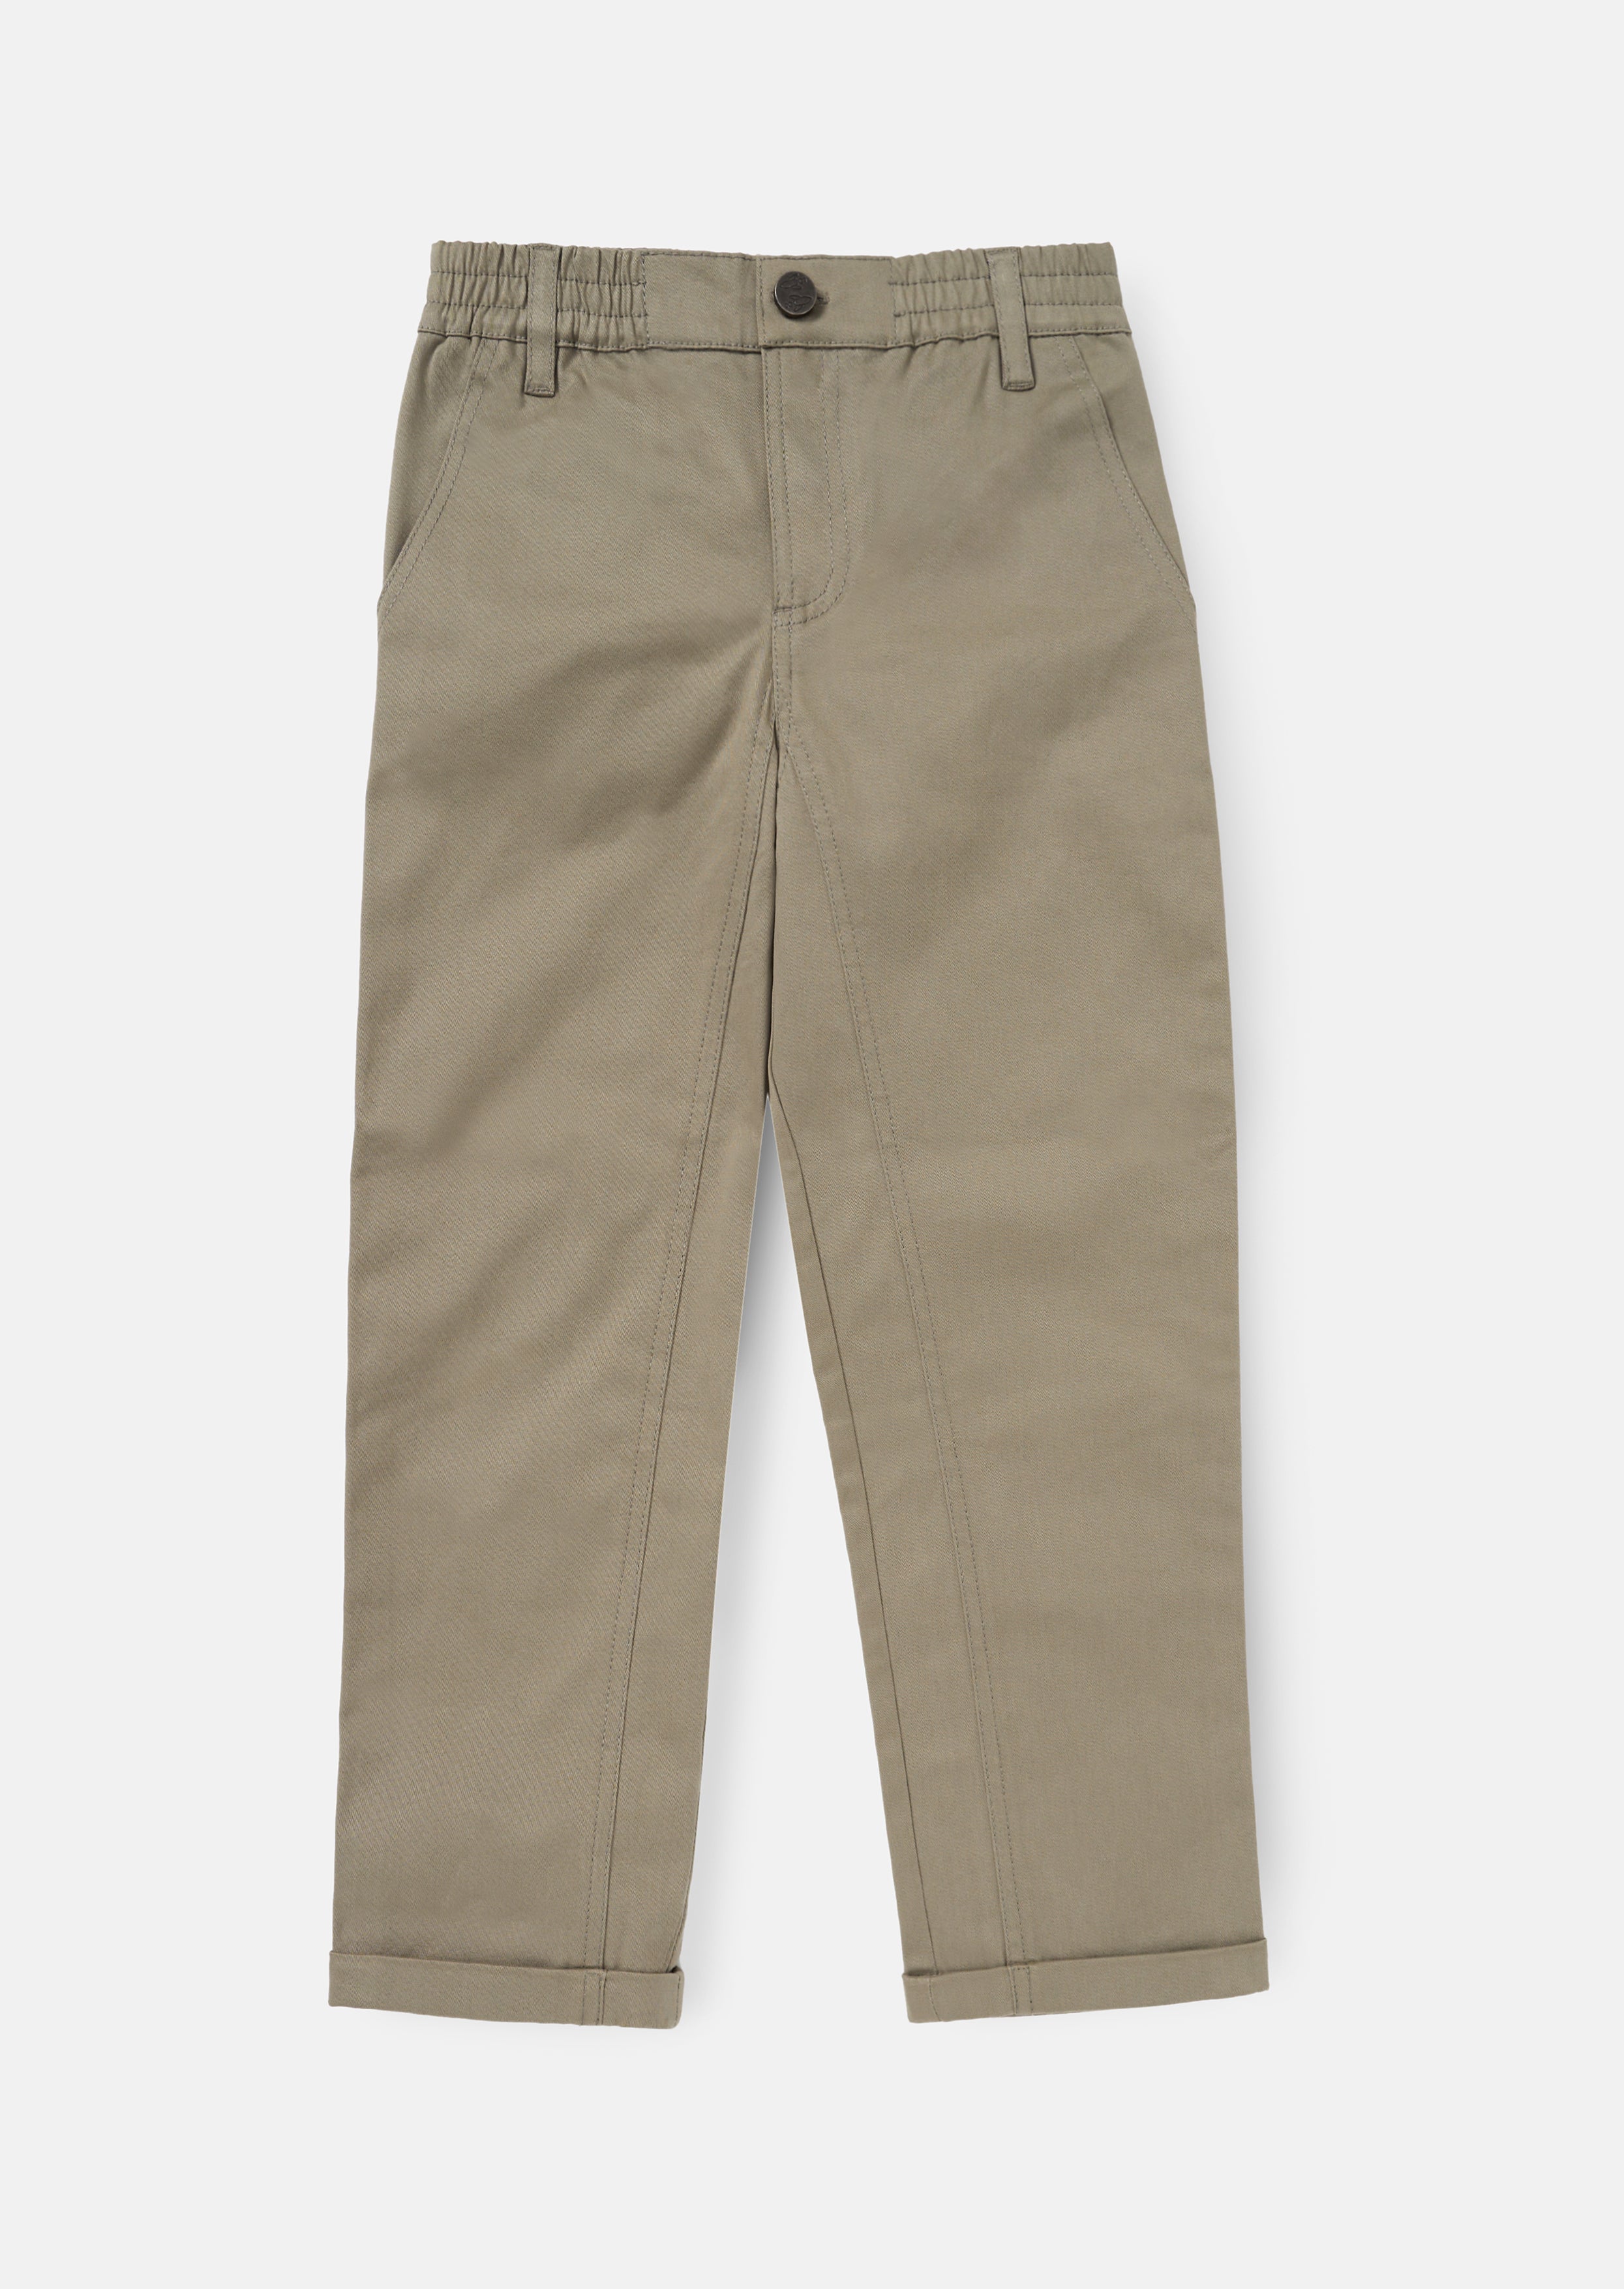 Boys Navy Cotton Smart Pants